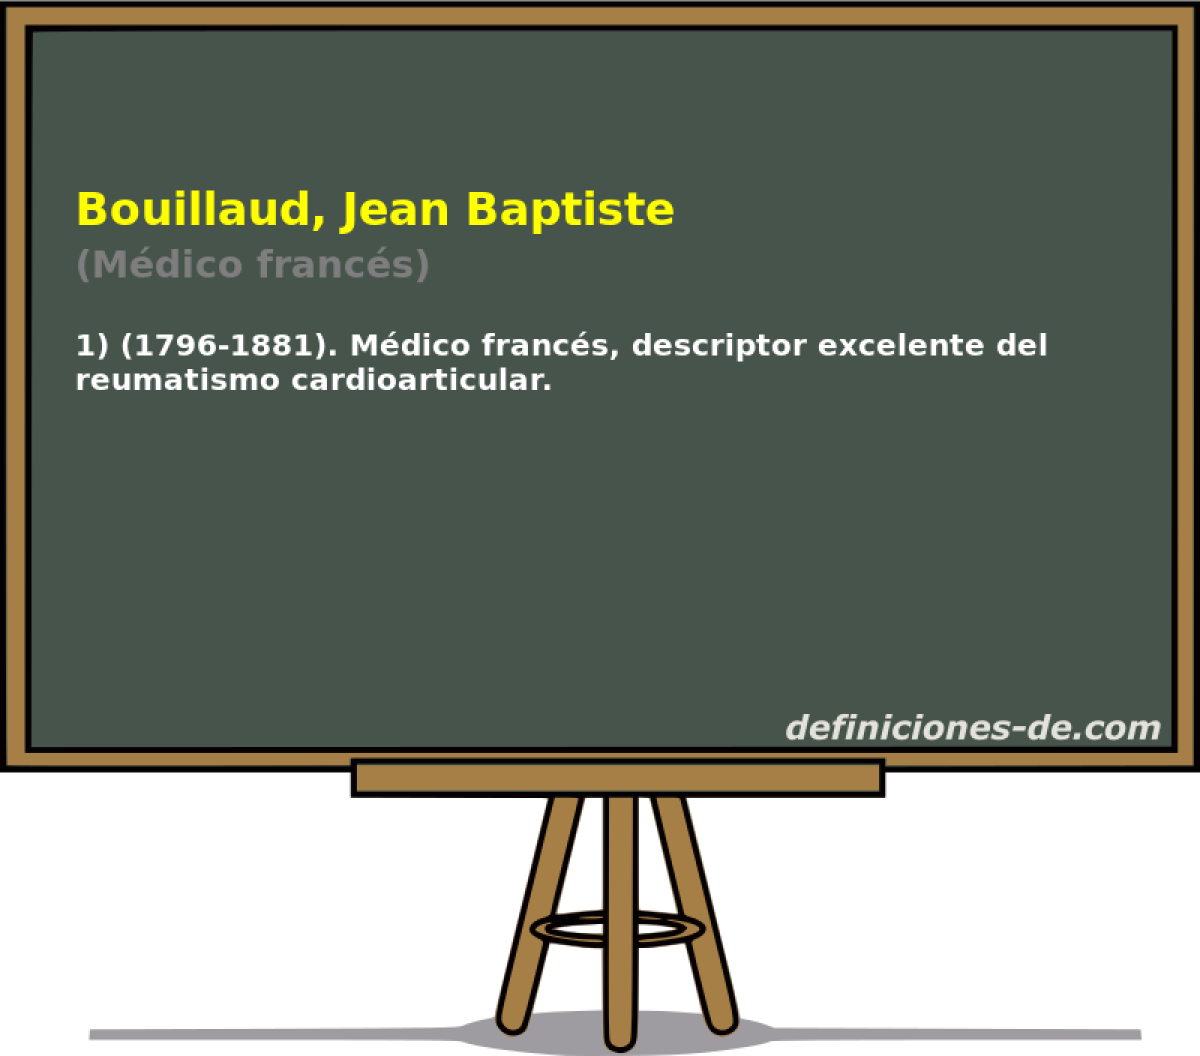 Bouillaud, Jean Baptiste (Mdico francs)